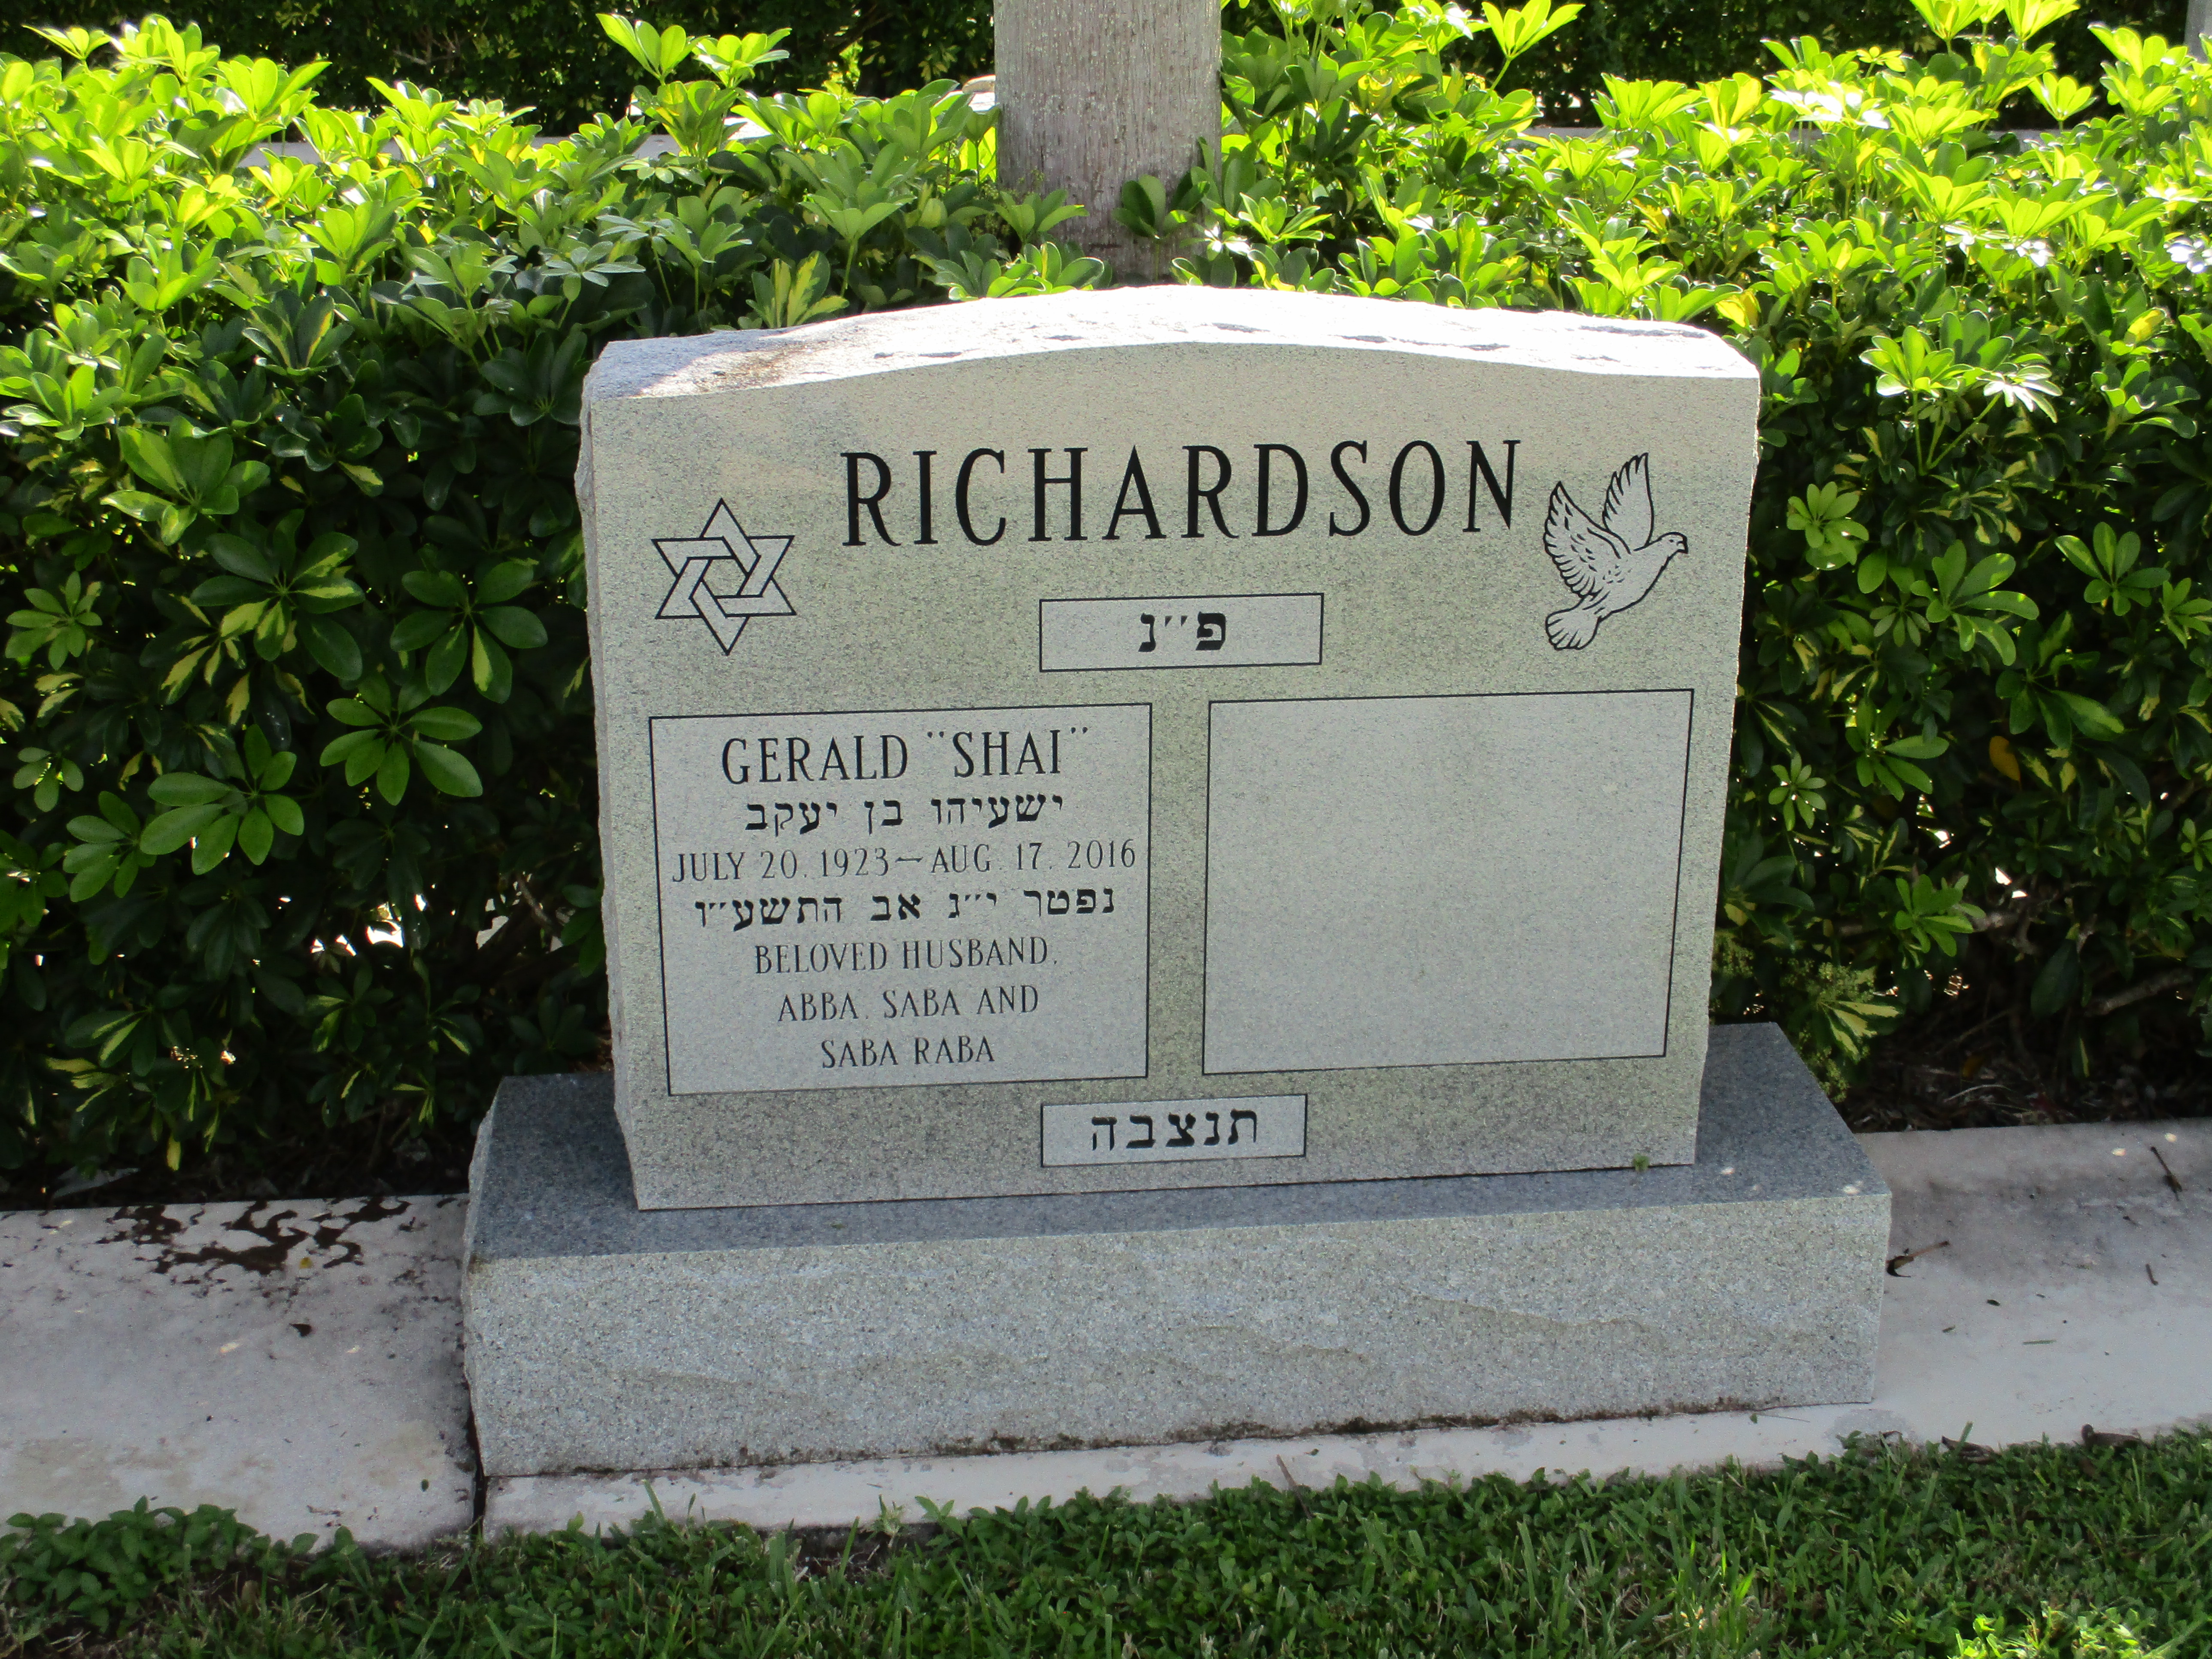 Gerald "Shai" Richardson